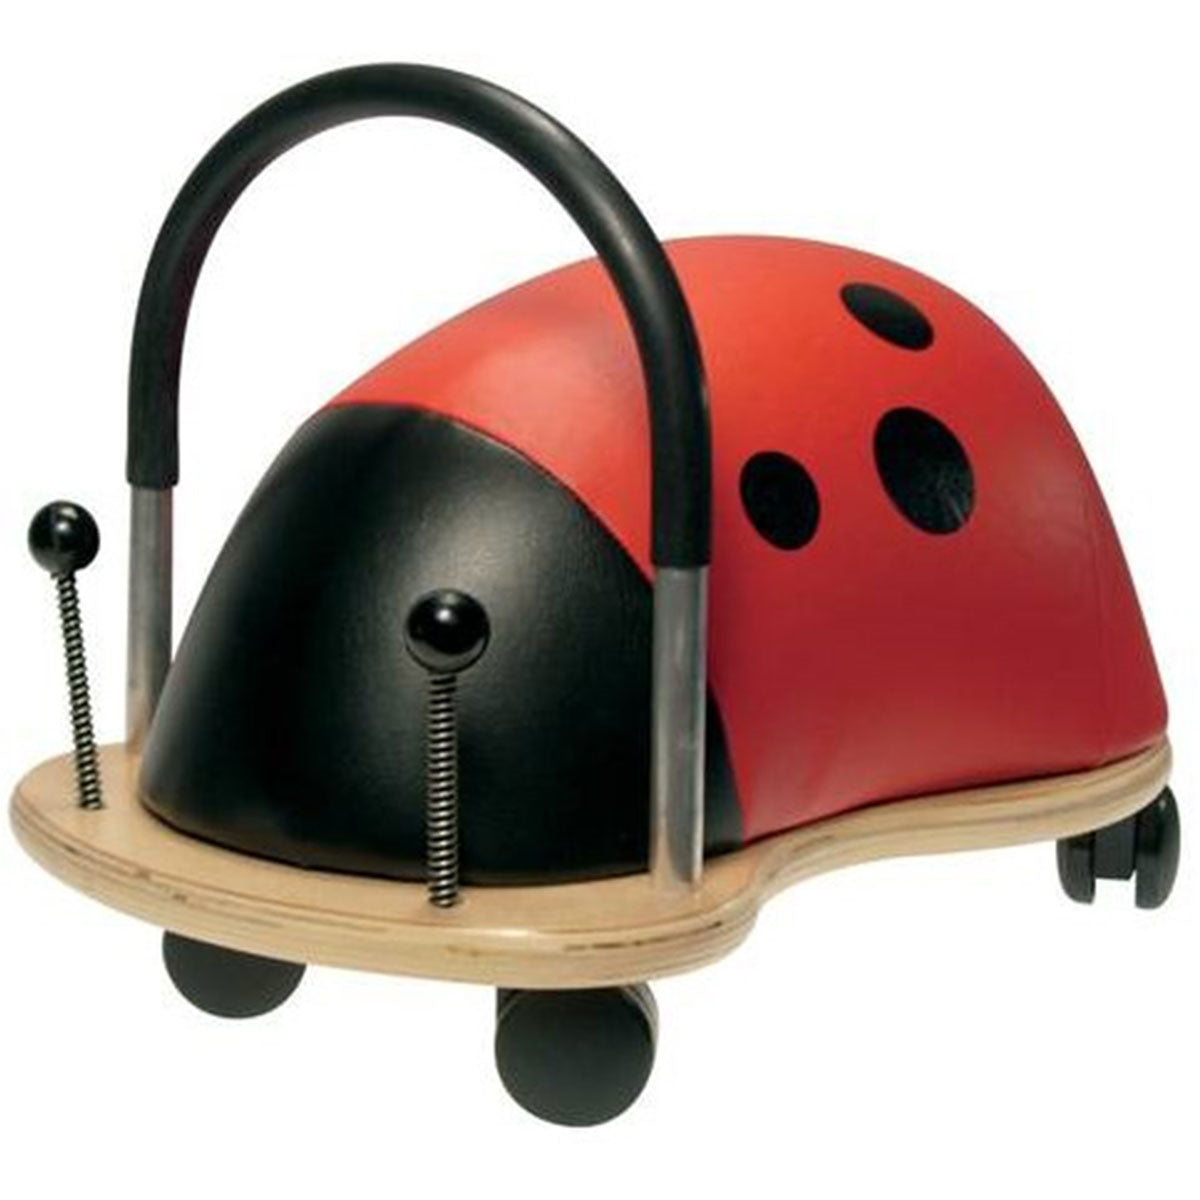 wheelybug ride-on ladybird